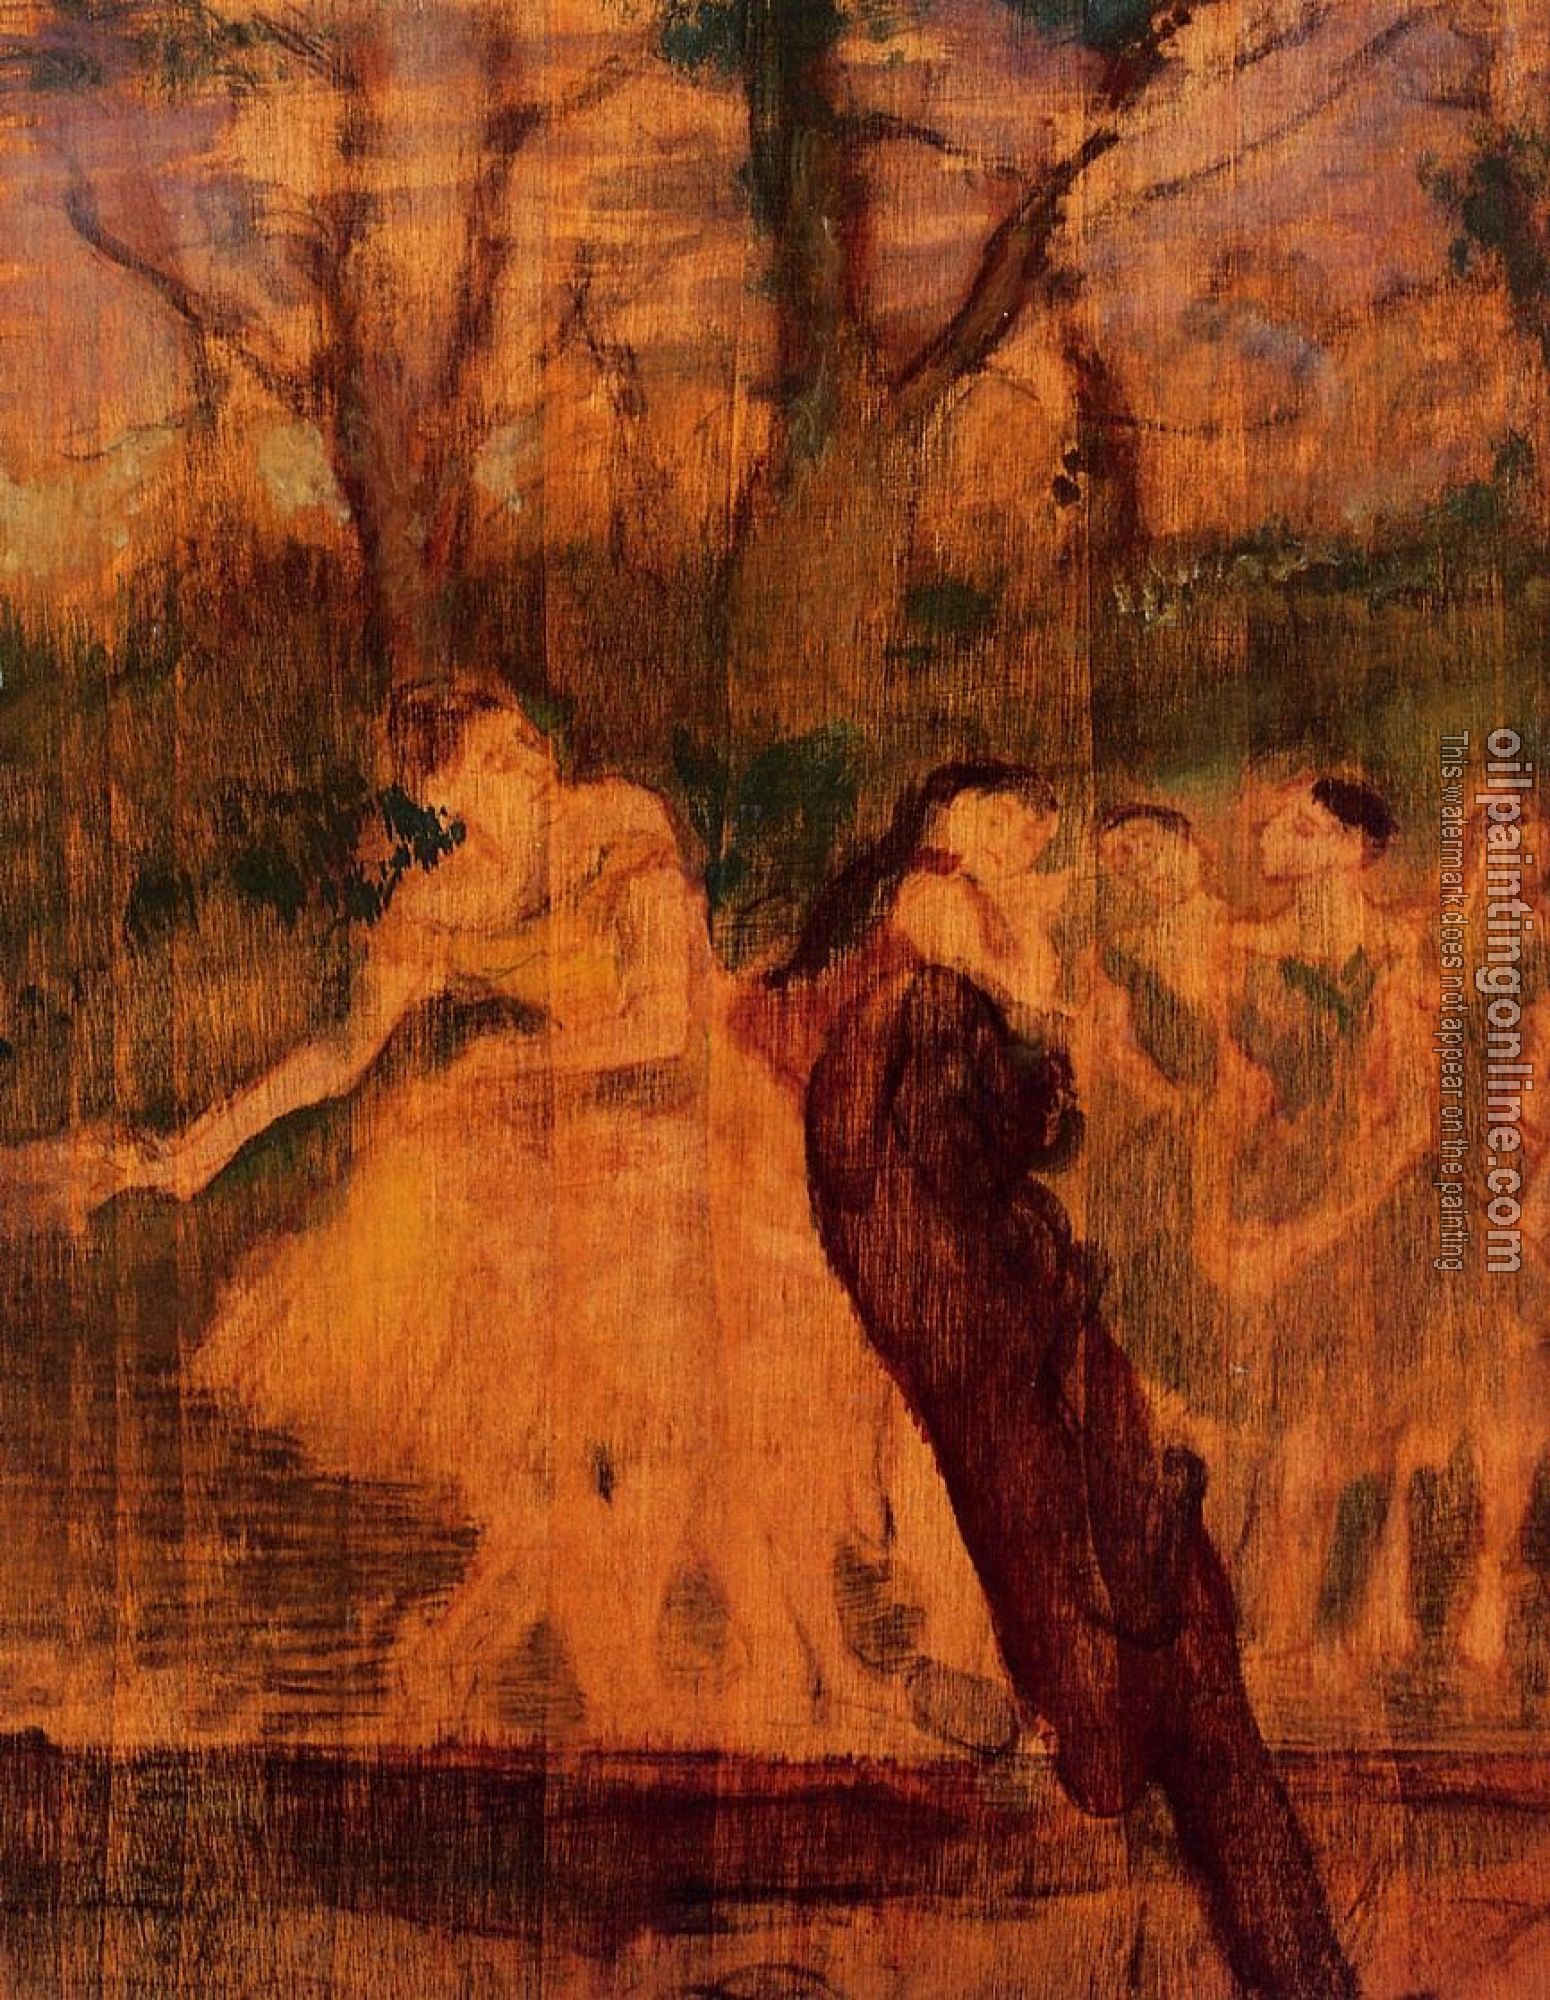 Degas, Edgar - Dancers on the Scenery